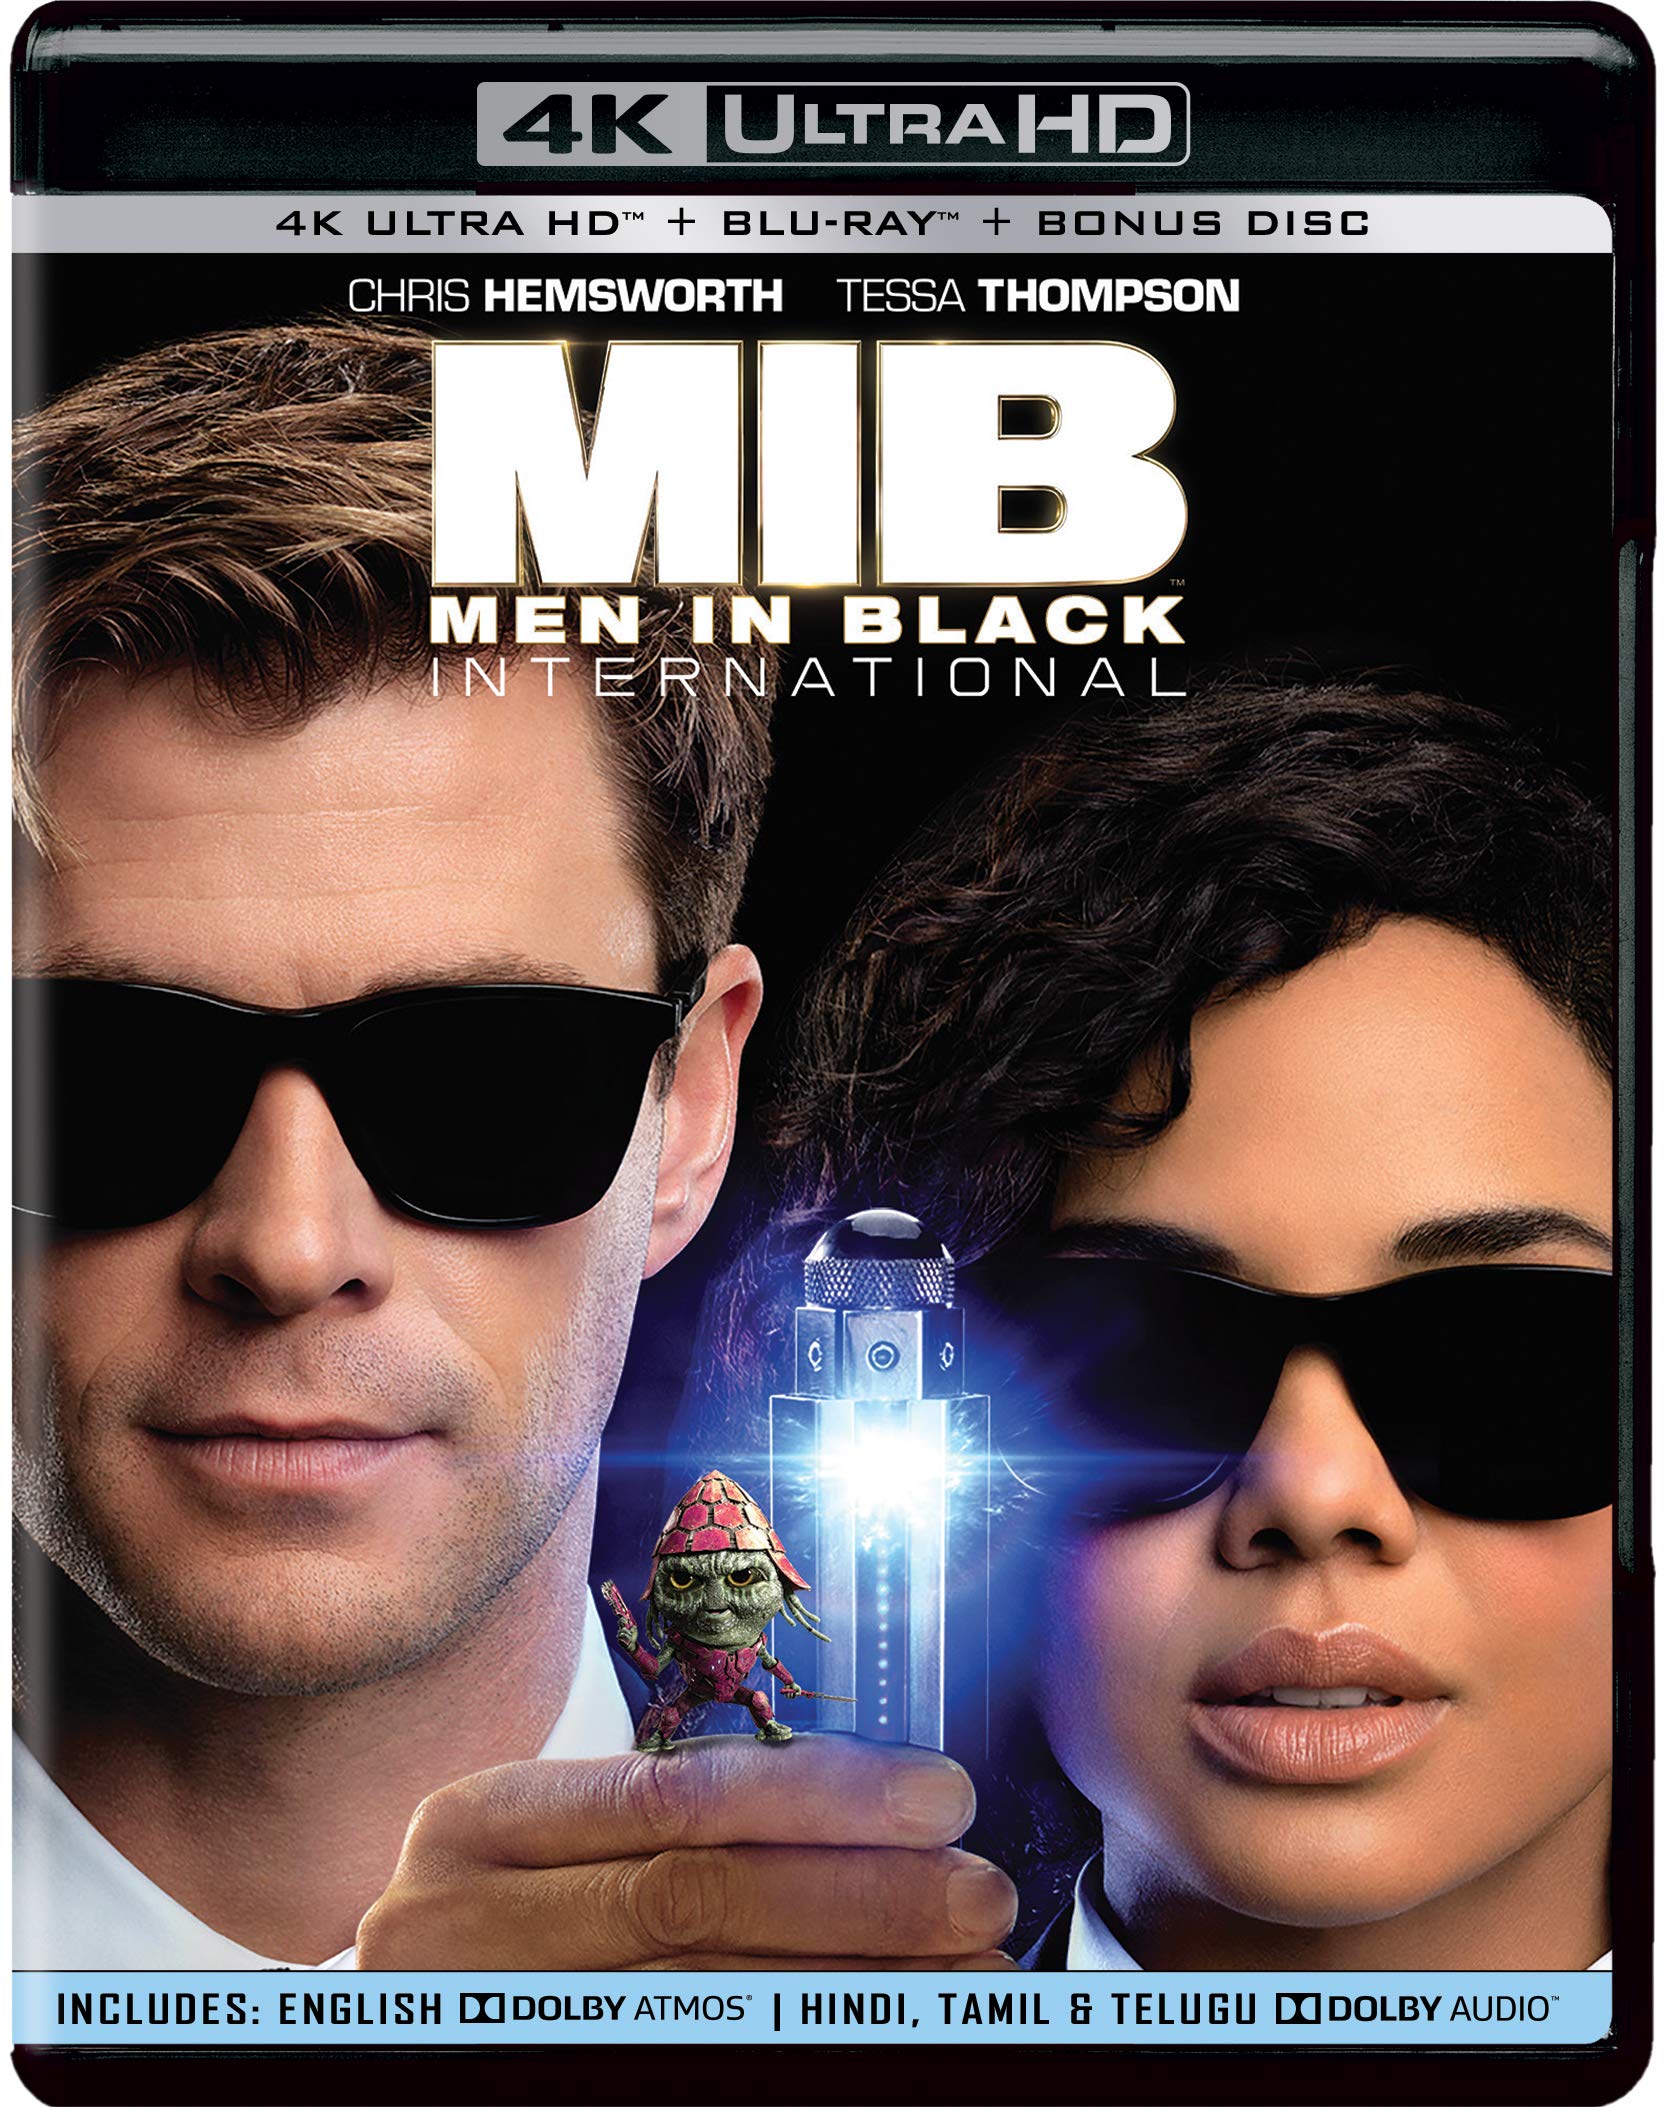 men-in-black-international-4k-uhd-hd-bonus-disc-3-disc-movie